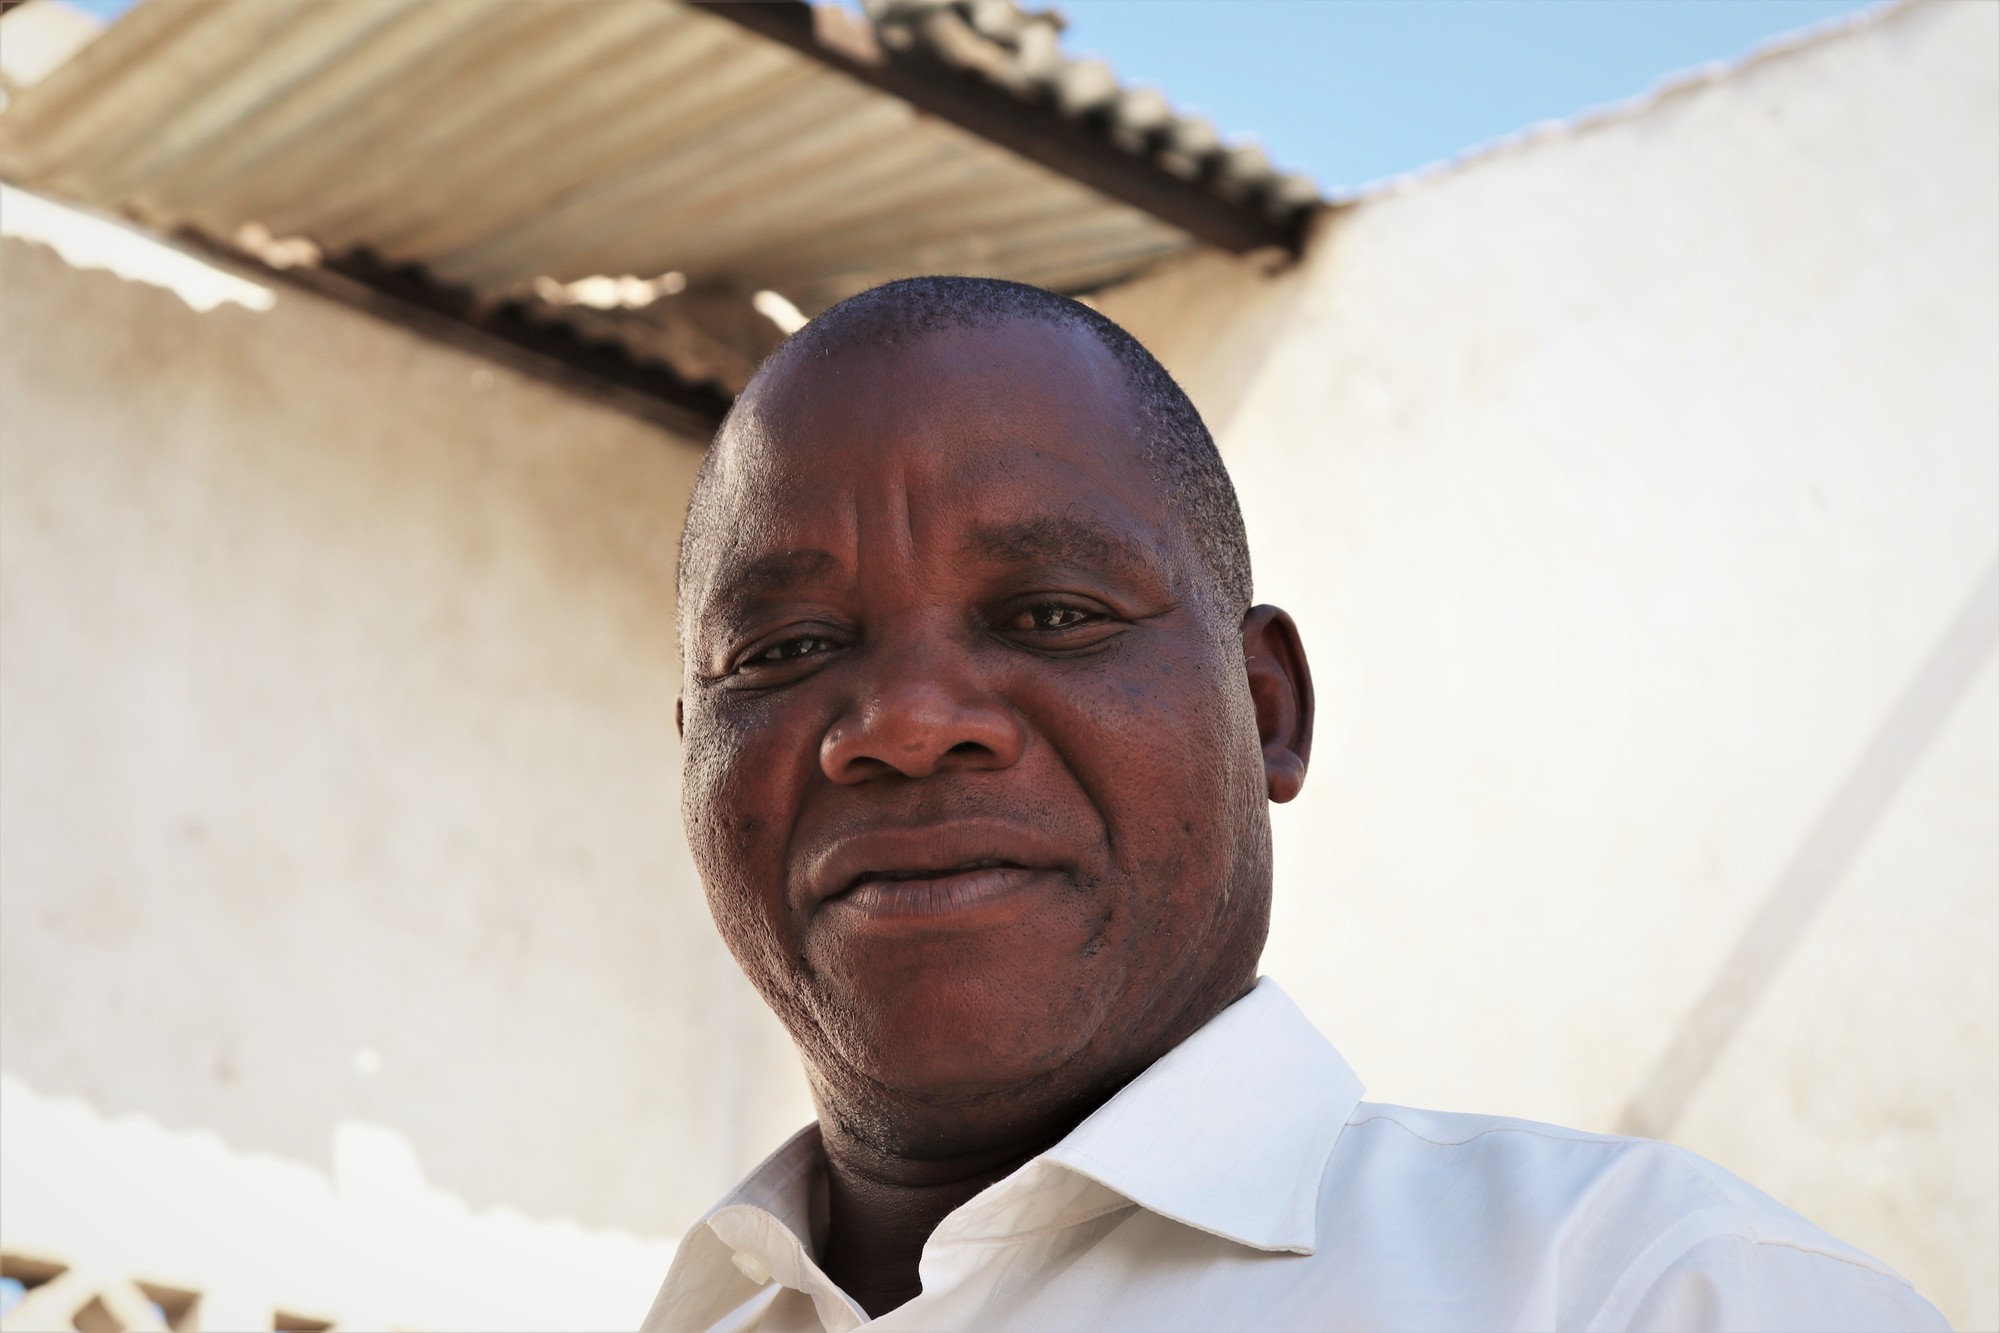 A portrait of a man in Mozambique 